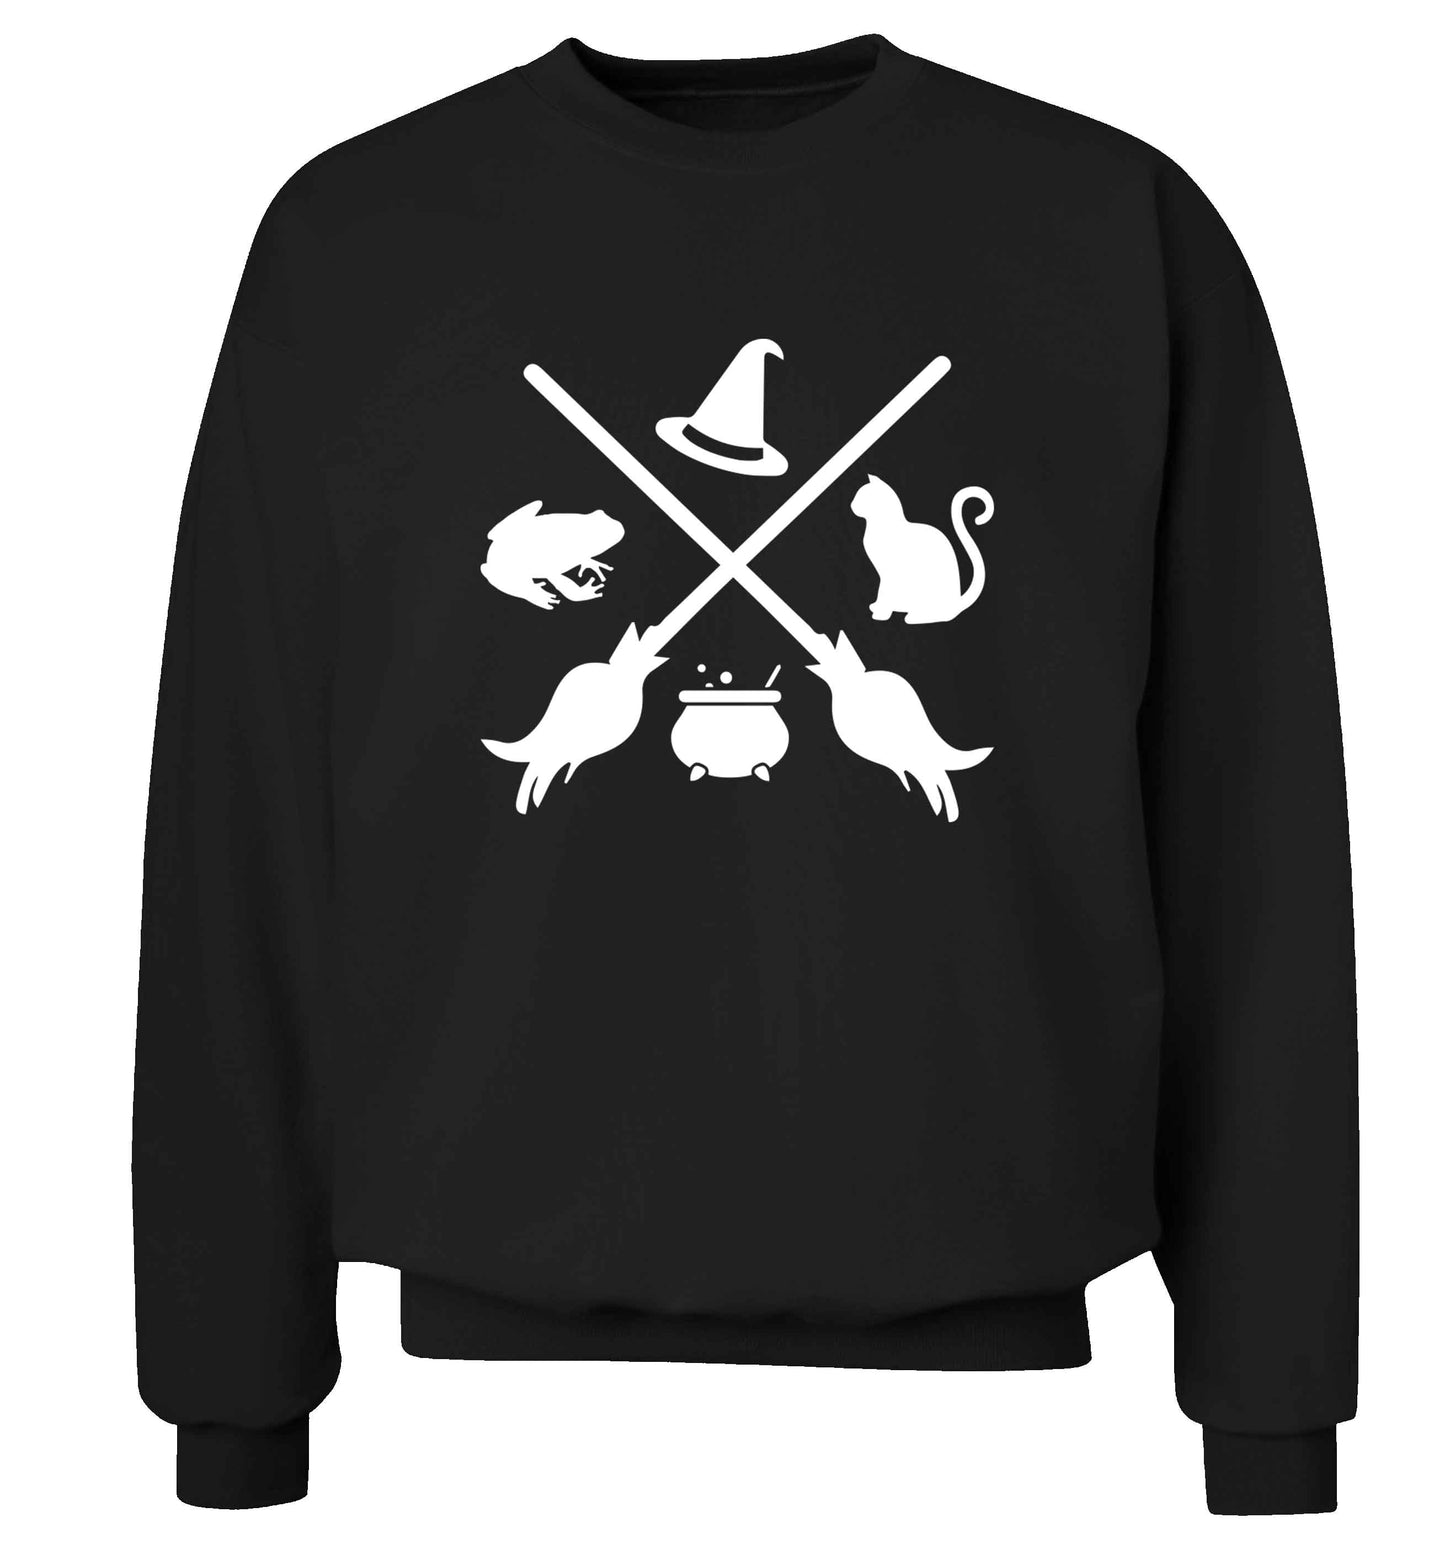 Witch symbol adult's unisex black sweater 2XL